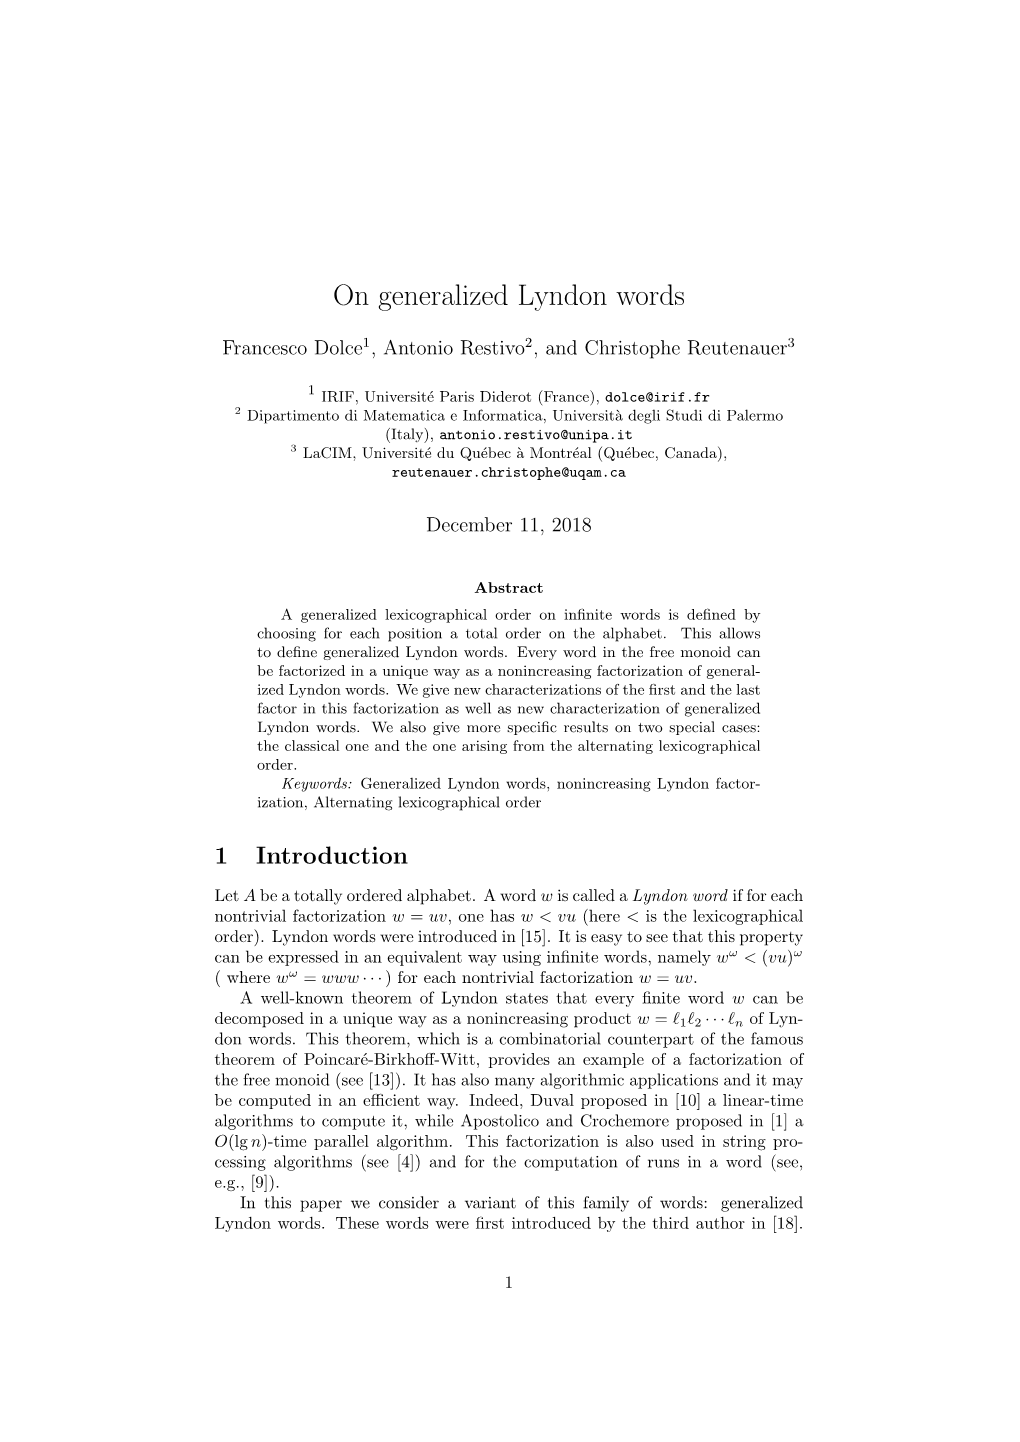 On Generalized Lyndon Words